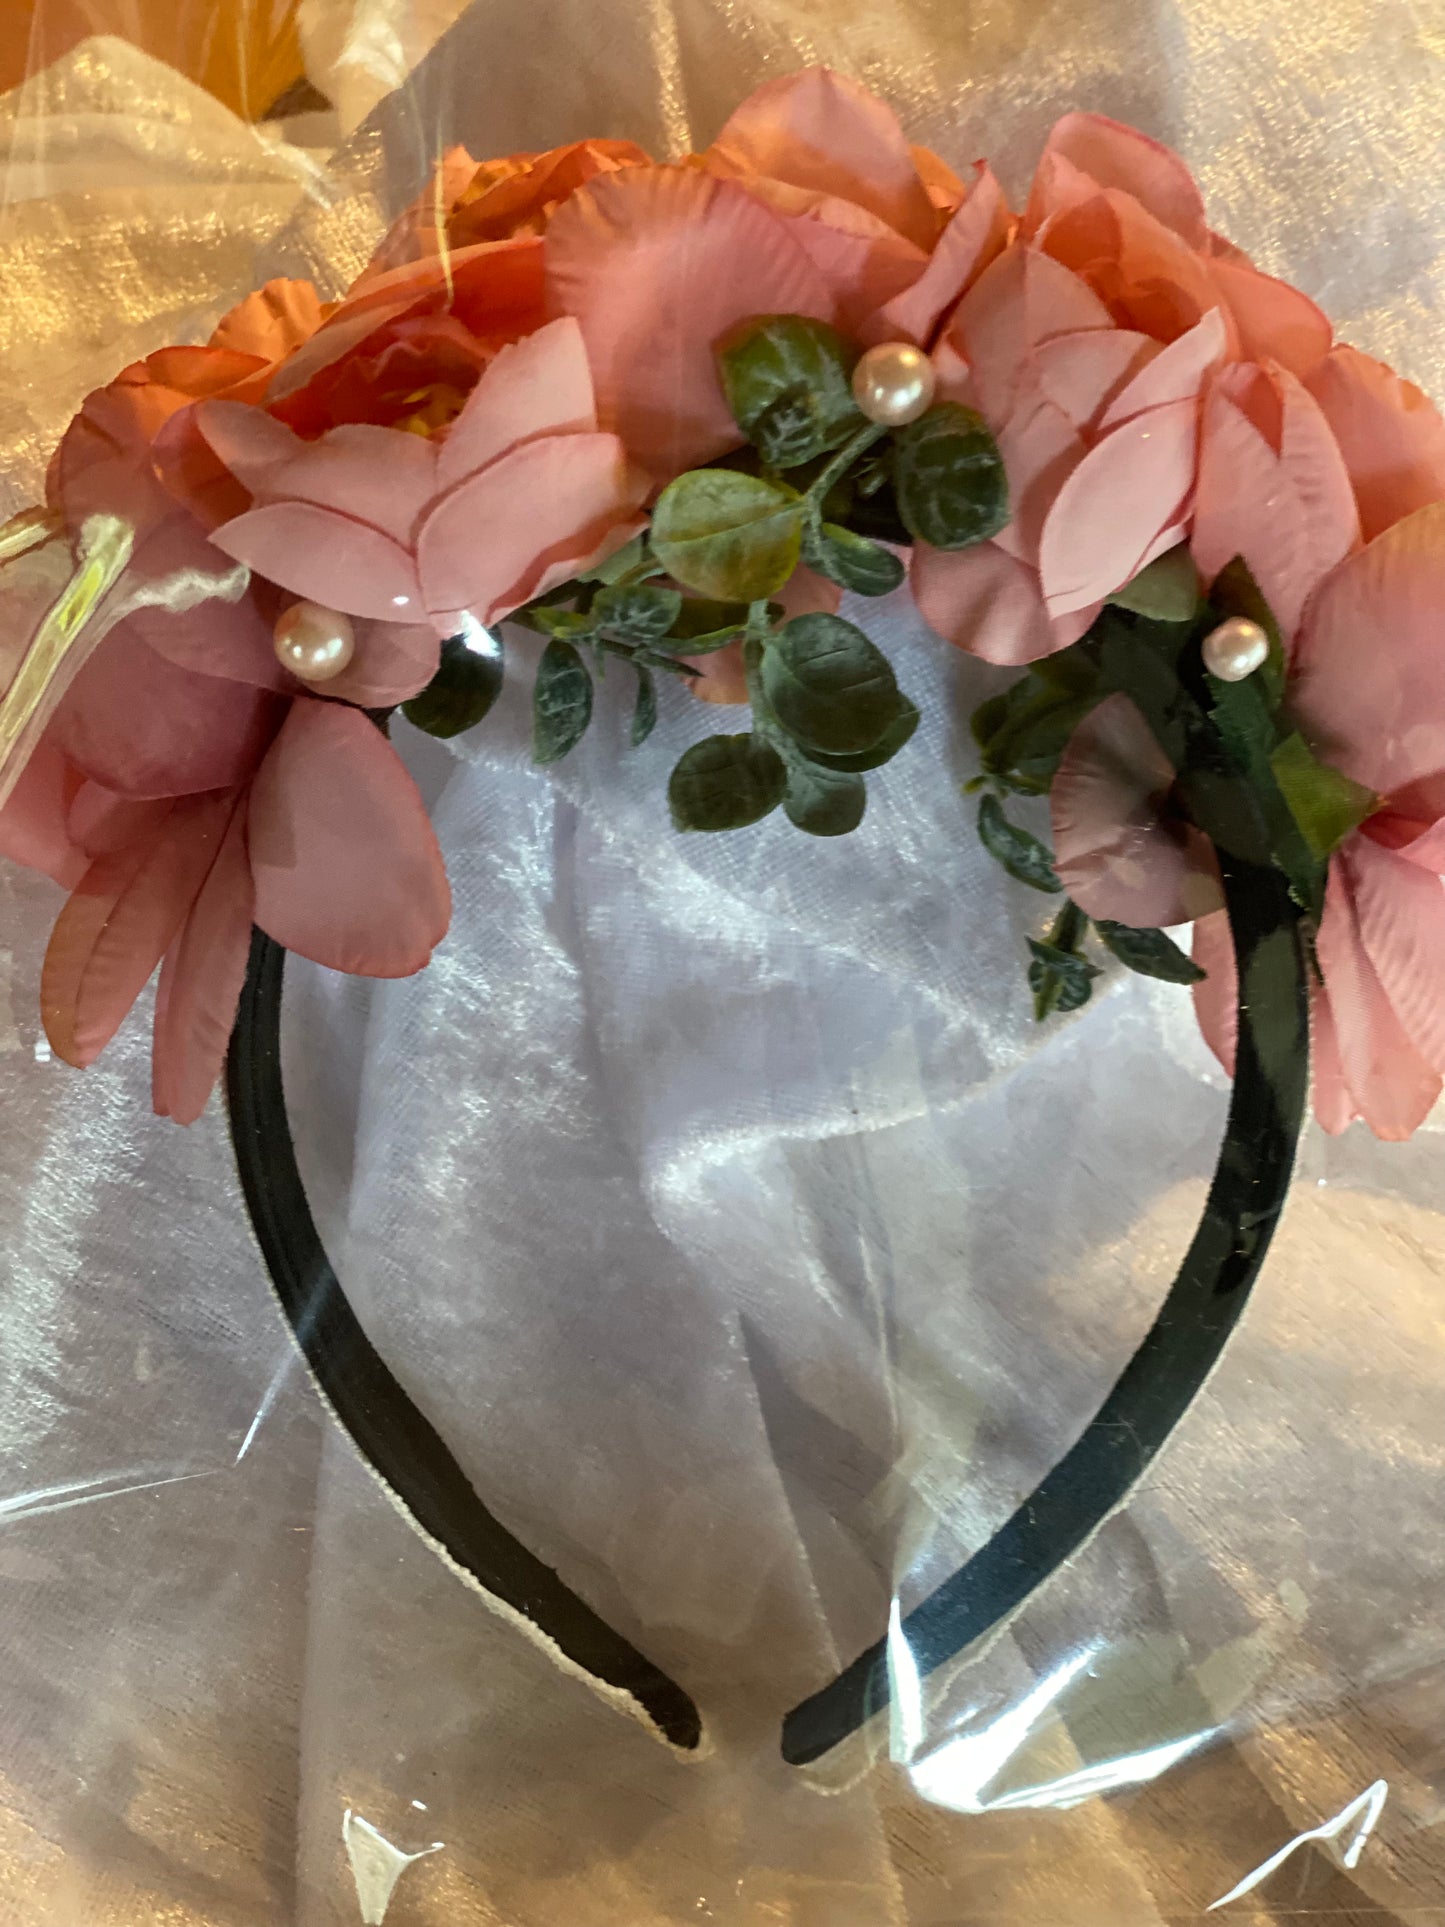 Flower Crowns Headpiece Wedding-Flower Girl-Festival